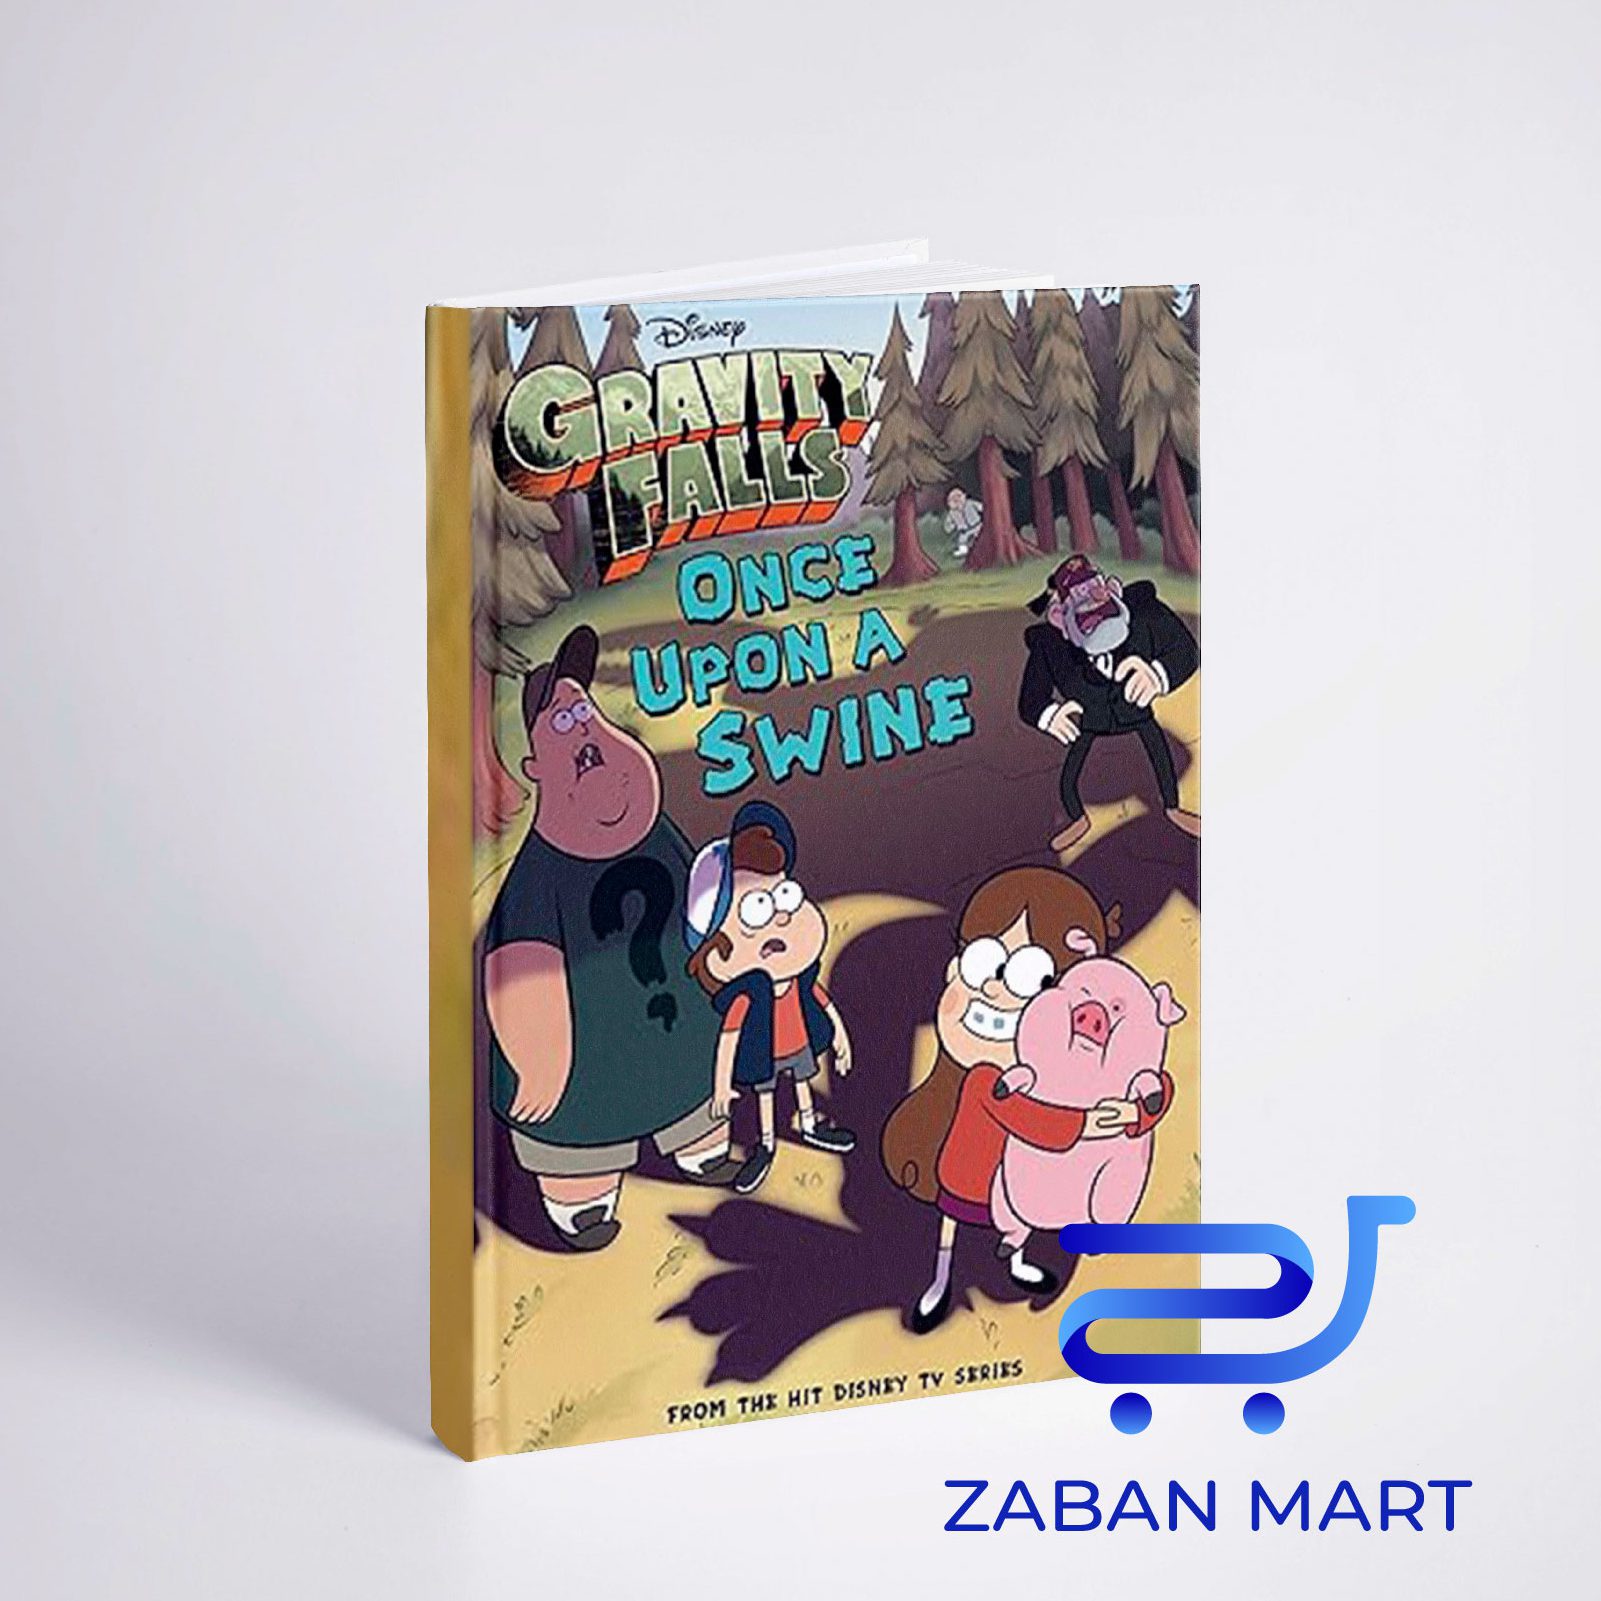 Gravity Falls: Pining Away (Gravity Falls Chapter Book)